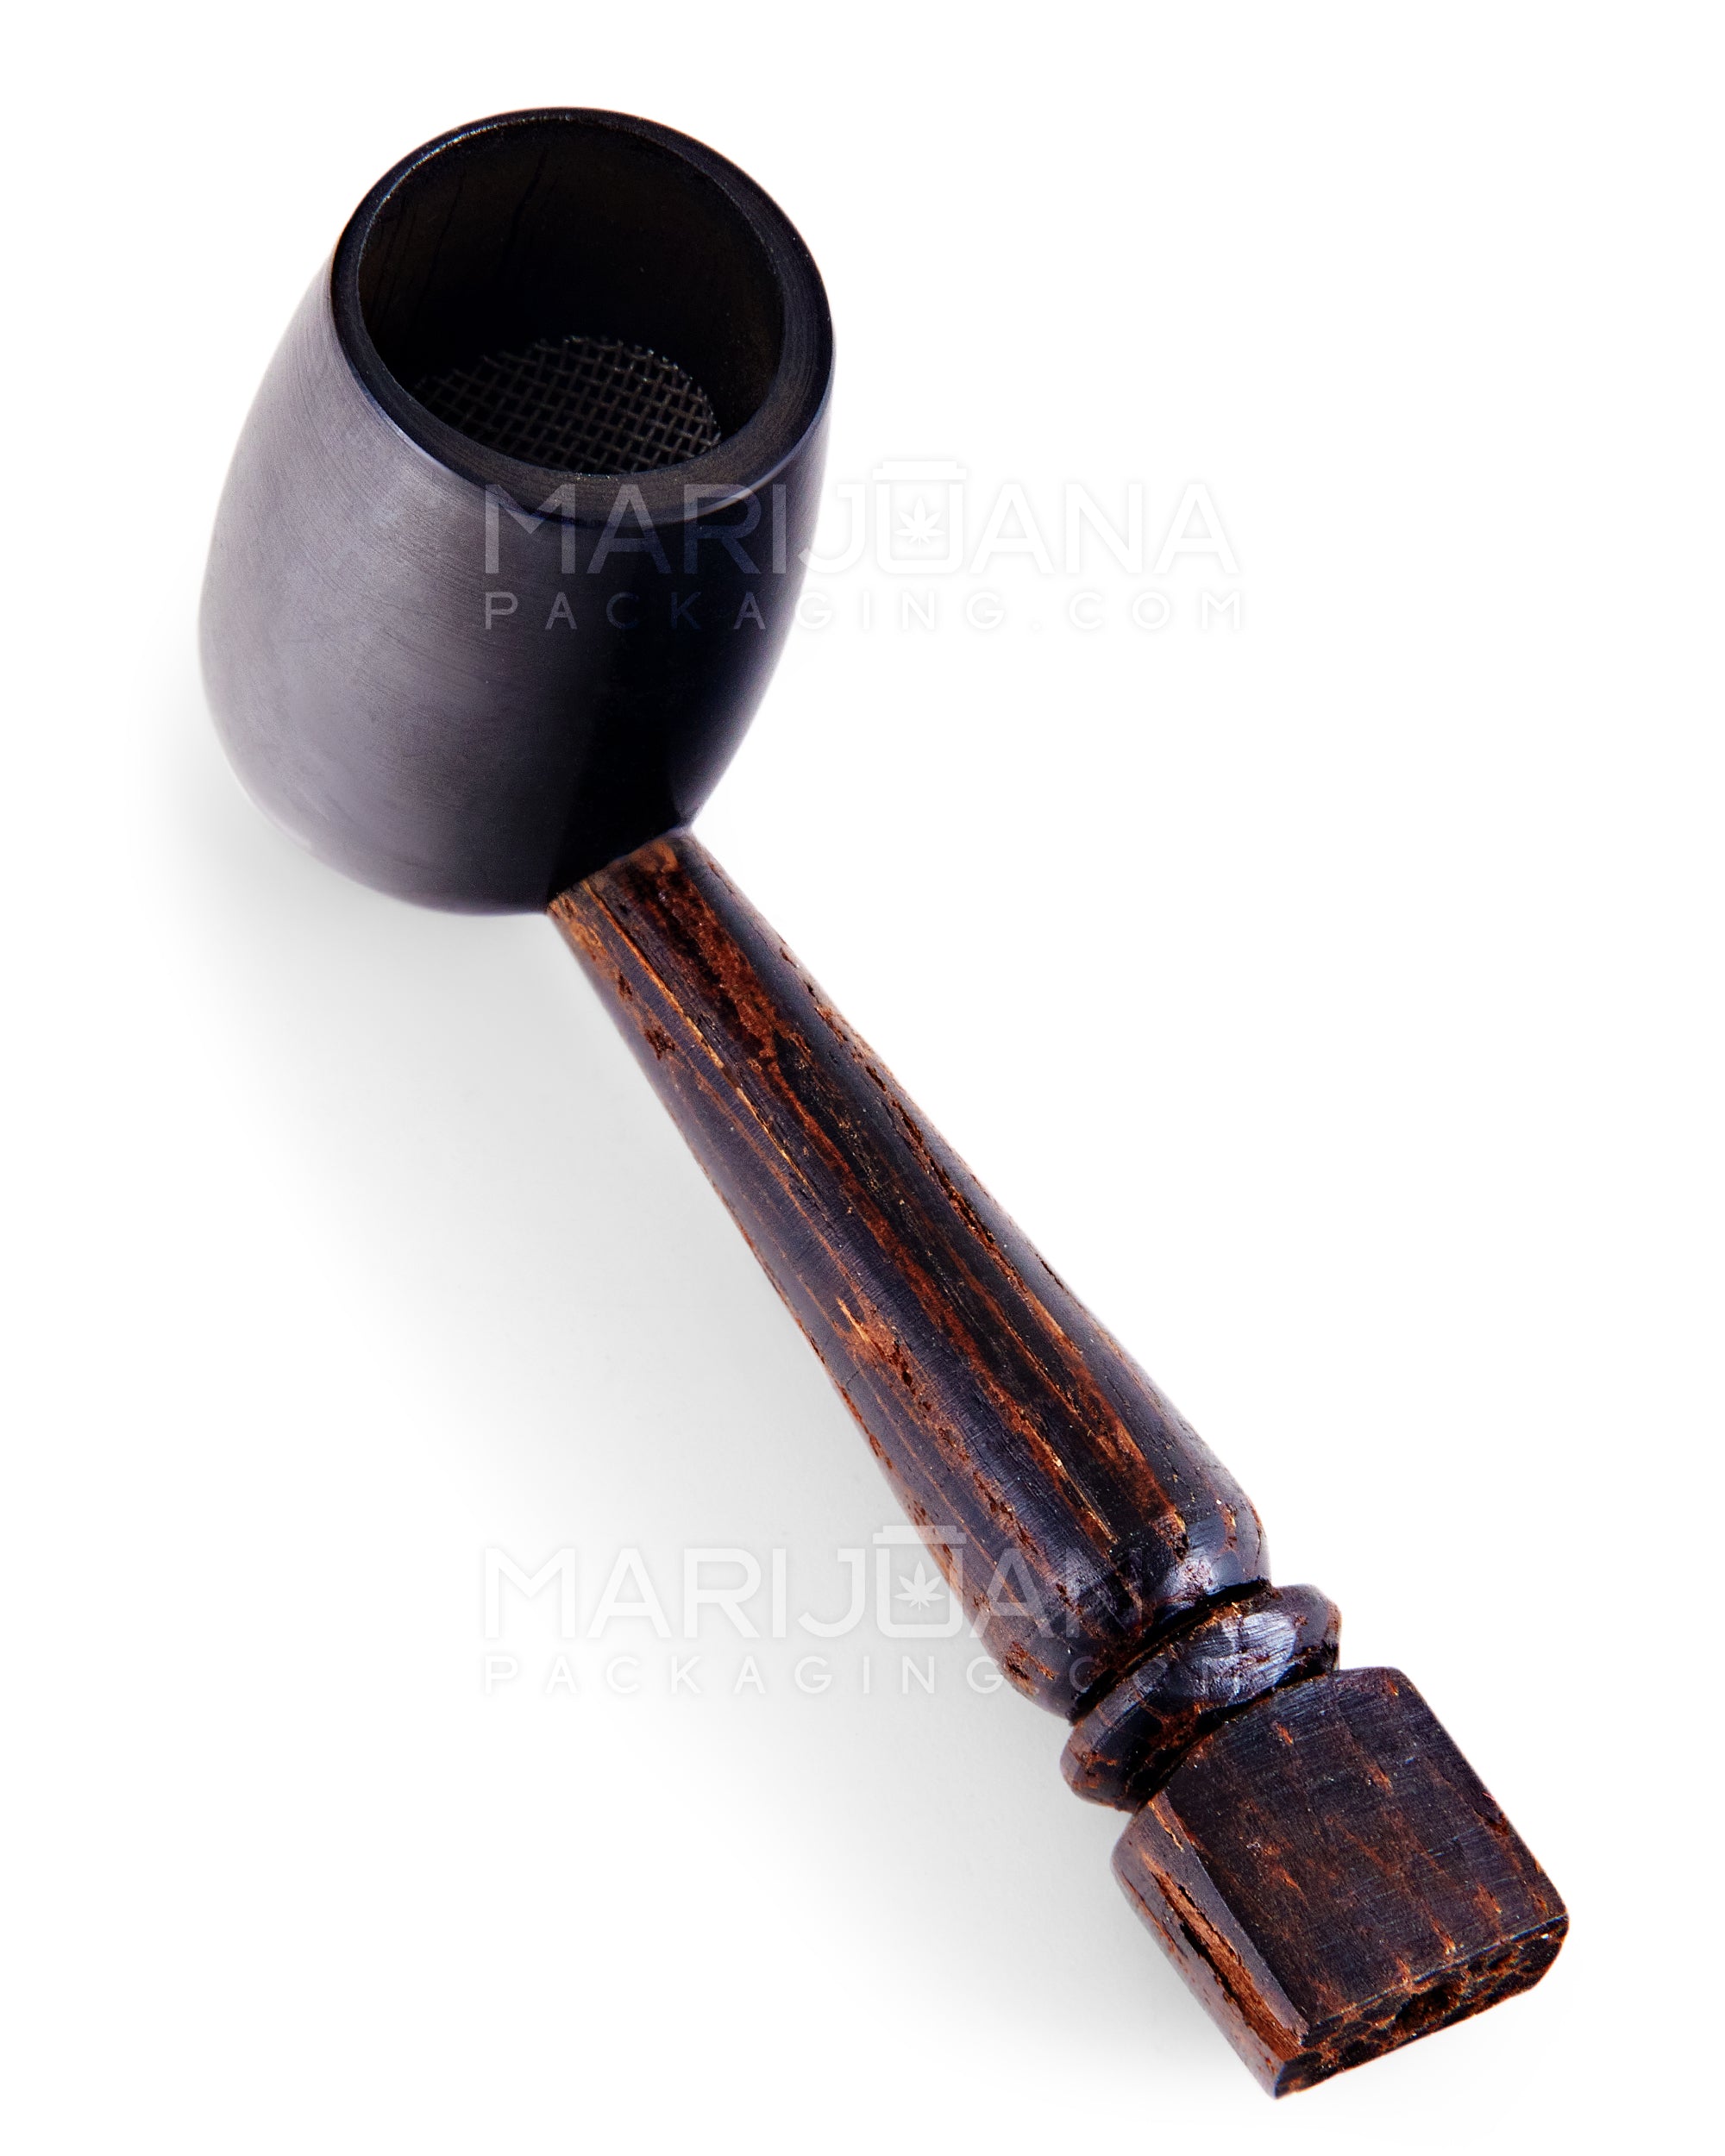 Howling Wolf Design Tagua Sherlock Hand Pipe | 3.5in Long - Wood - Brown - 2